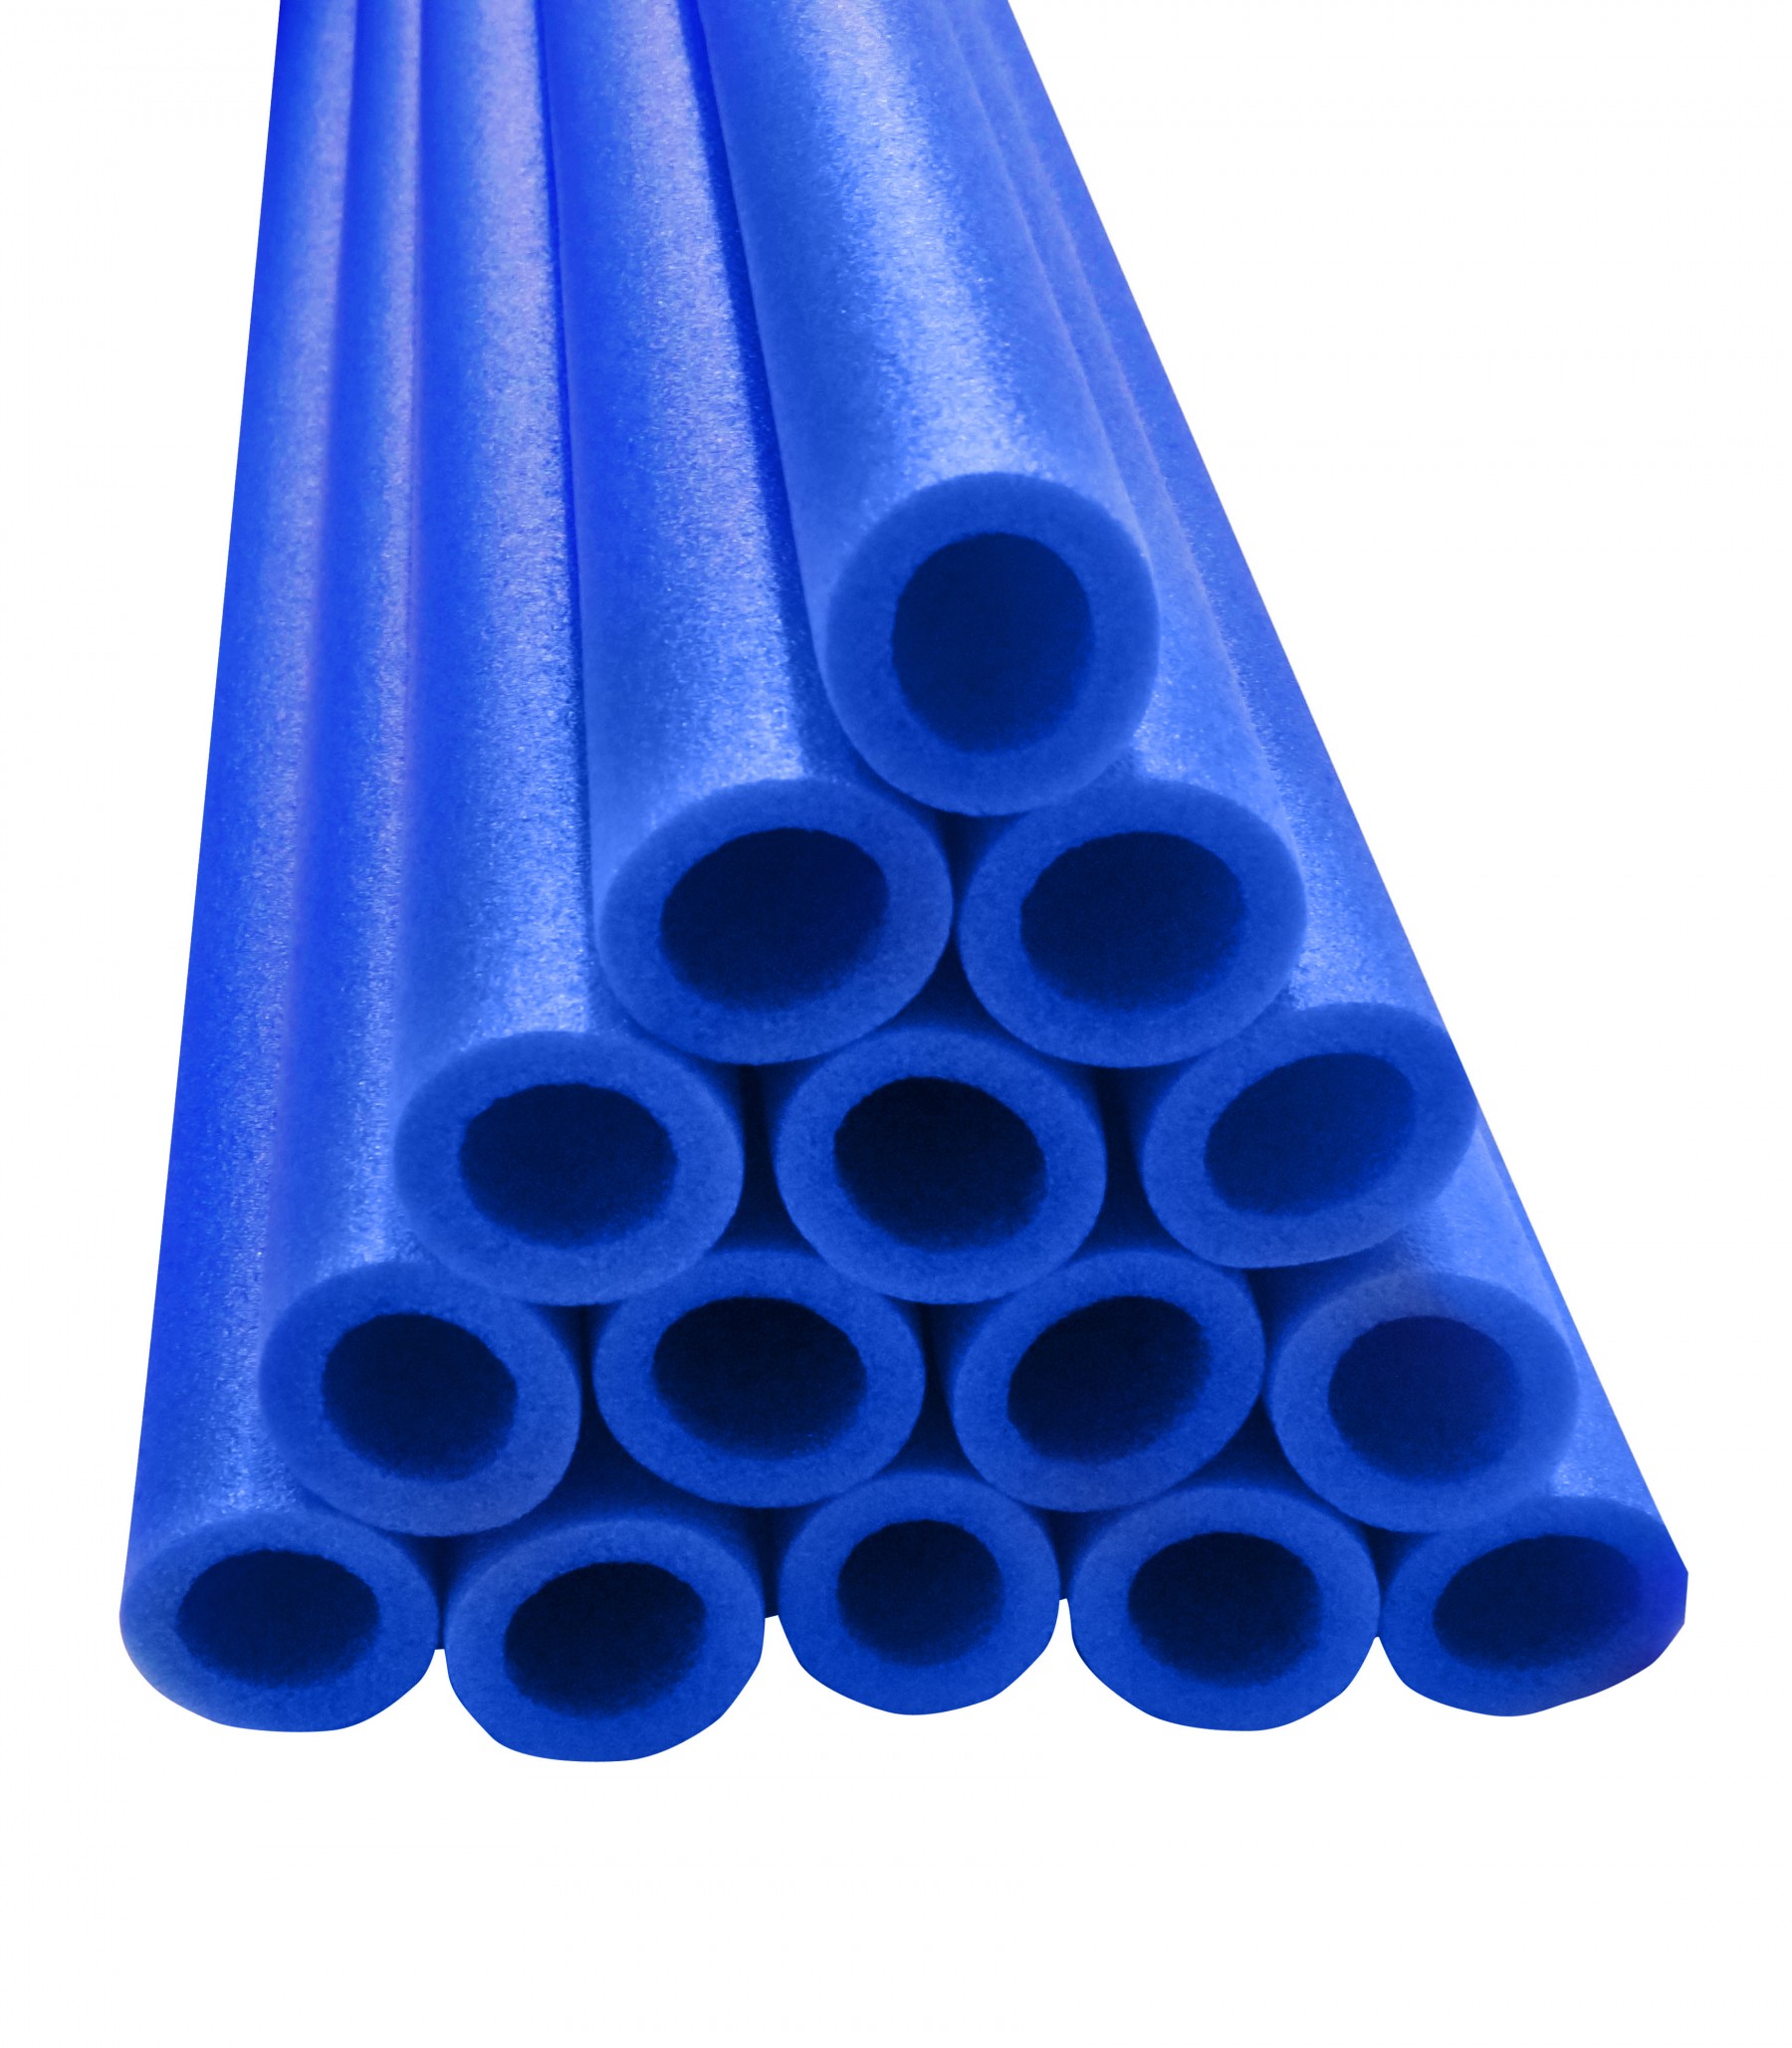 12 tubi in gommapiuma per trampolino e pali in rete imbottitura per aste per trampolino da 40 cm protezione per aste rullo in schiuma blu 